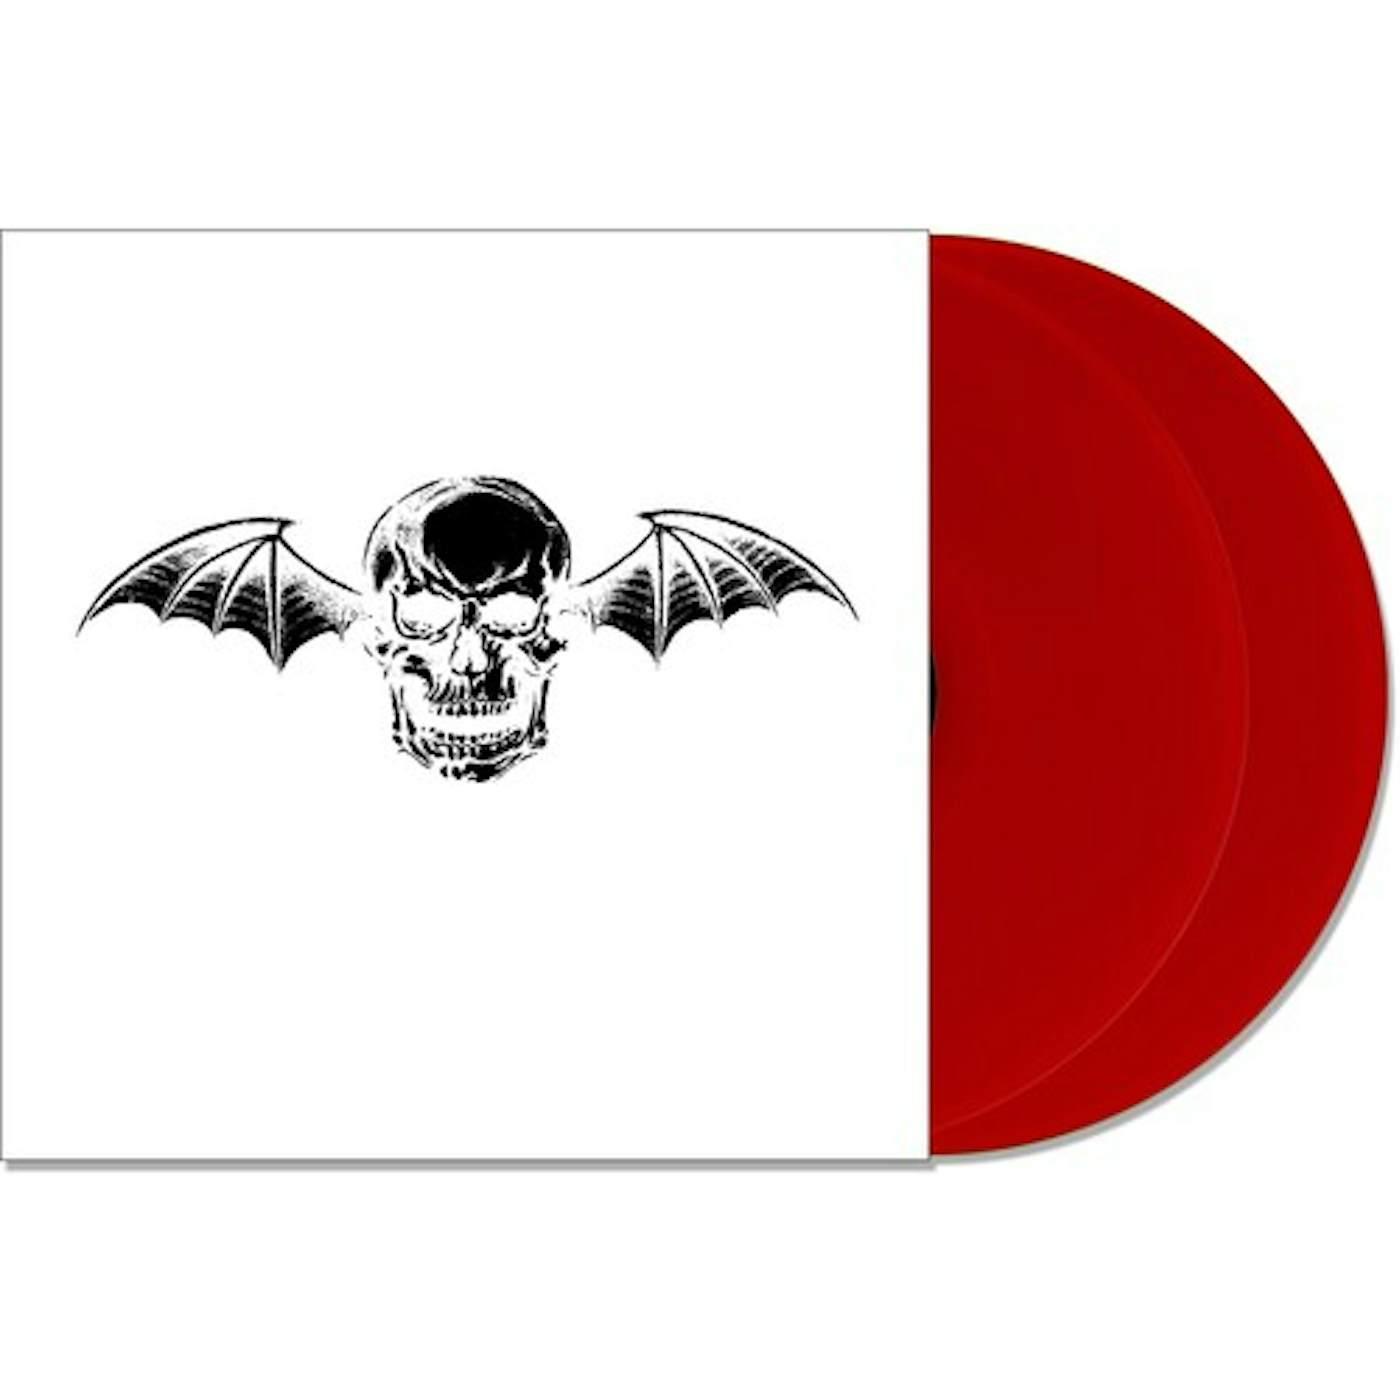  Avenged Sevenfold S/T - Red Vinyl Record